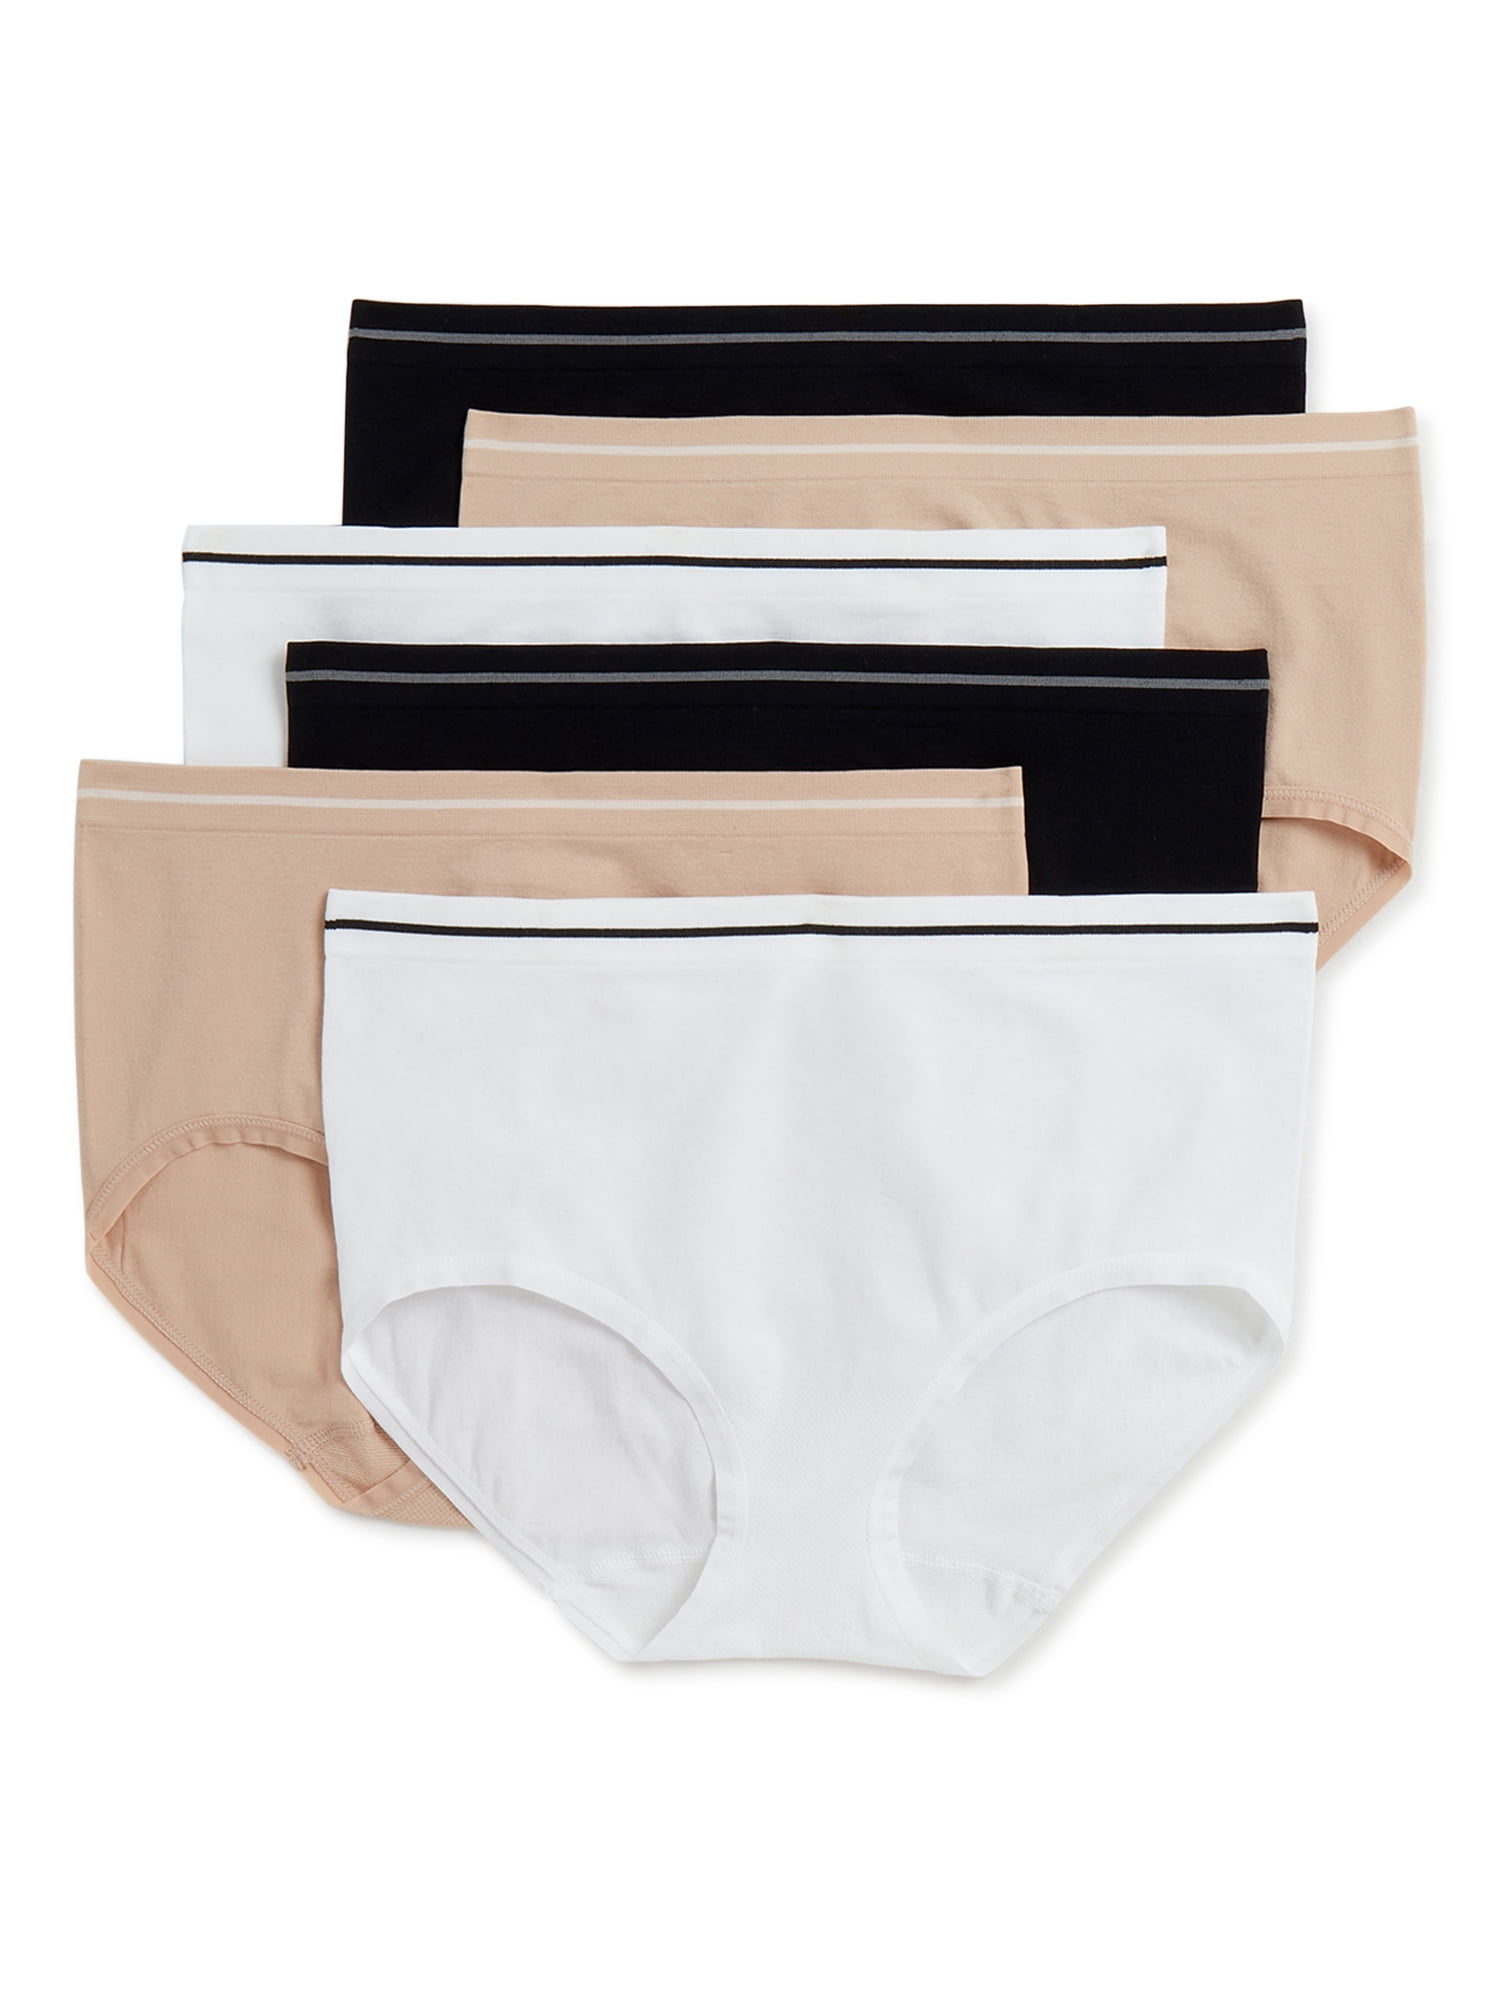 Best Fitting Panty Women's Seamless Brief Panties, 6-Pack